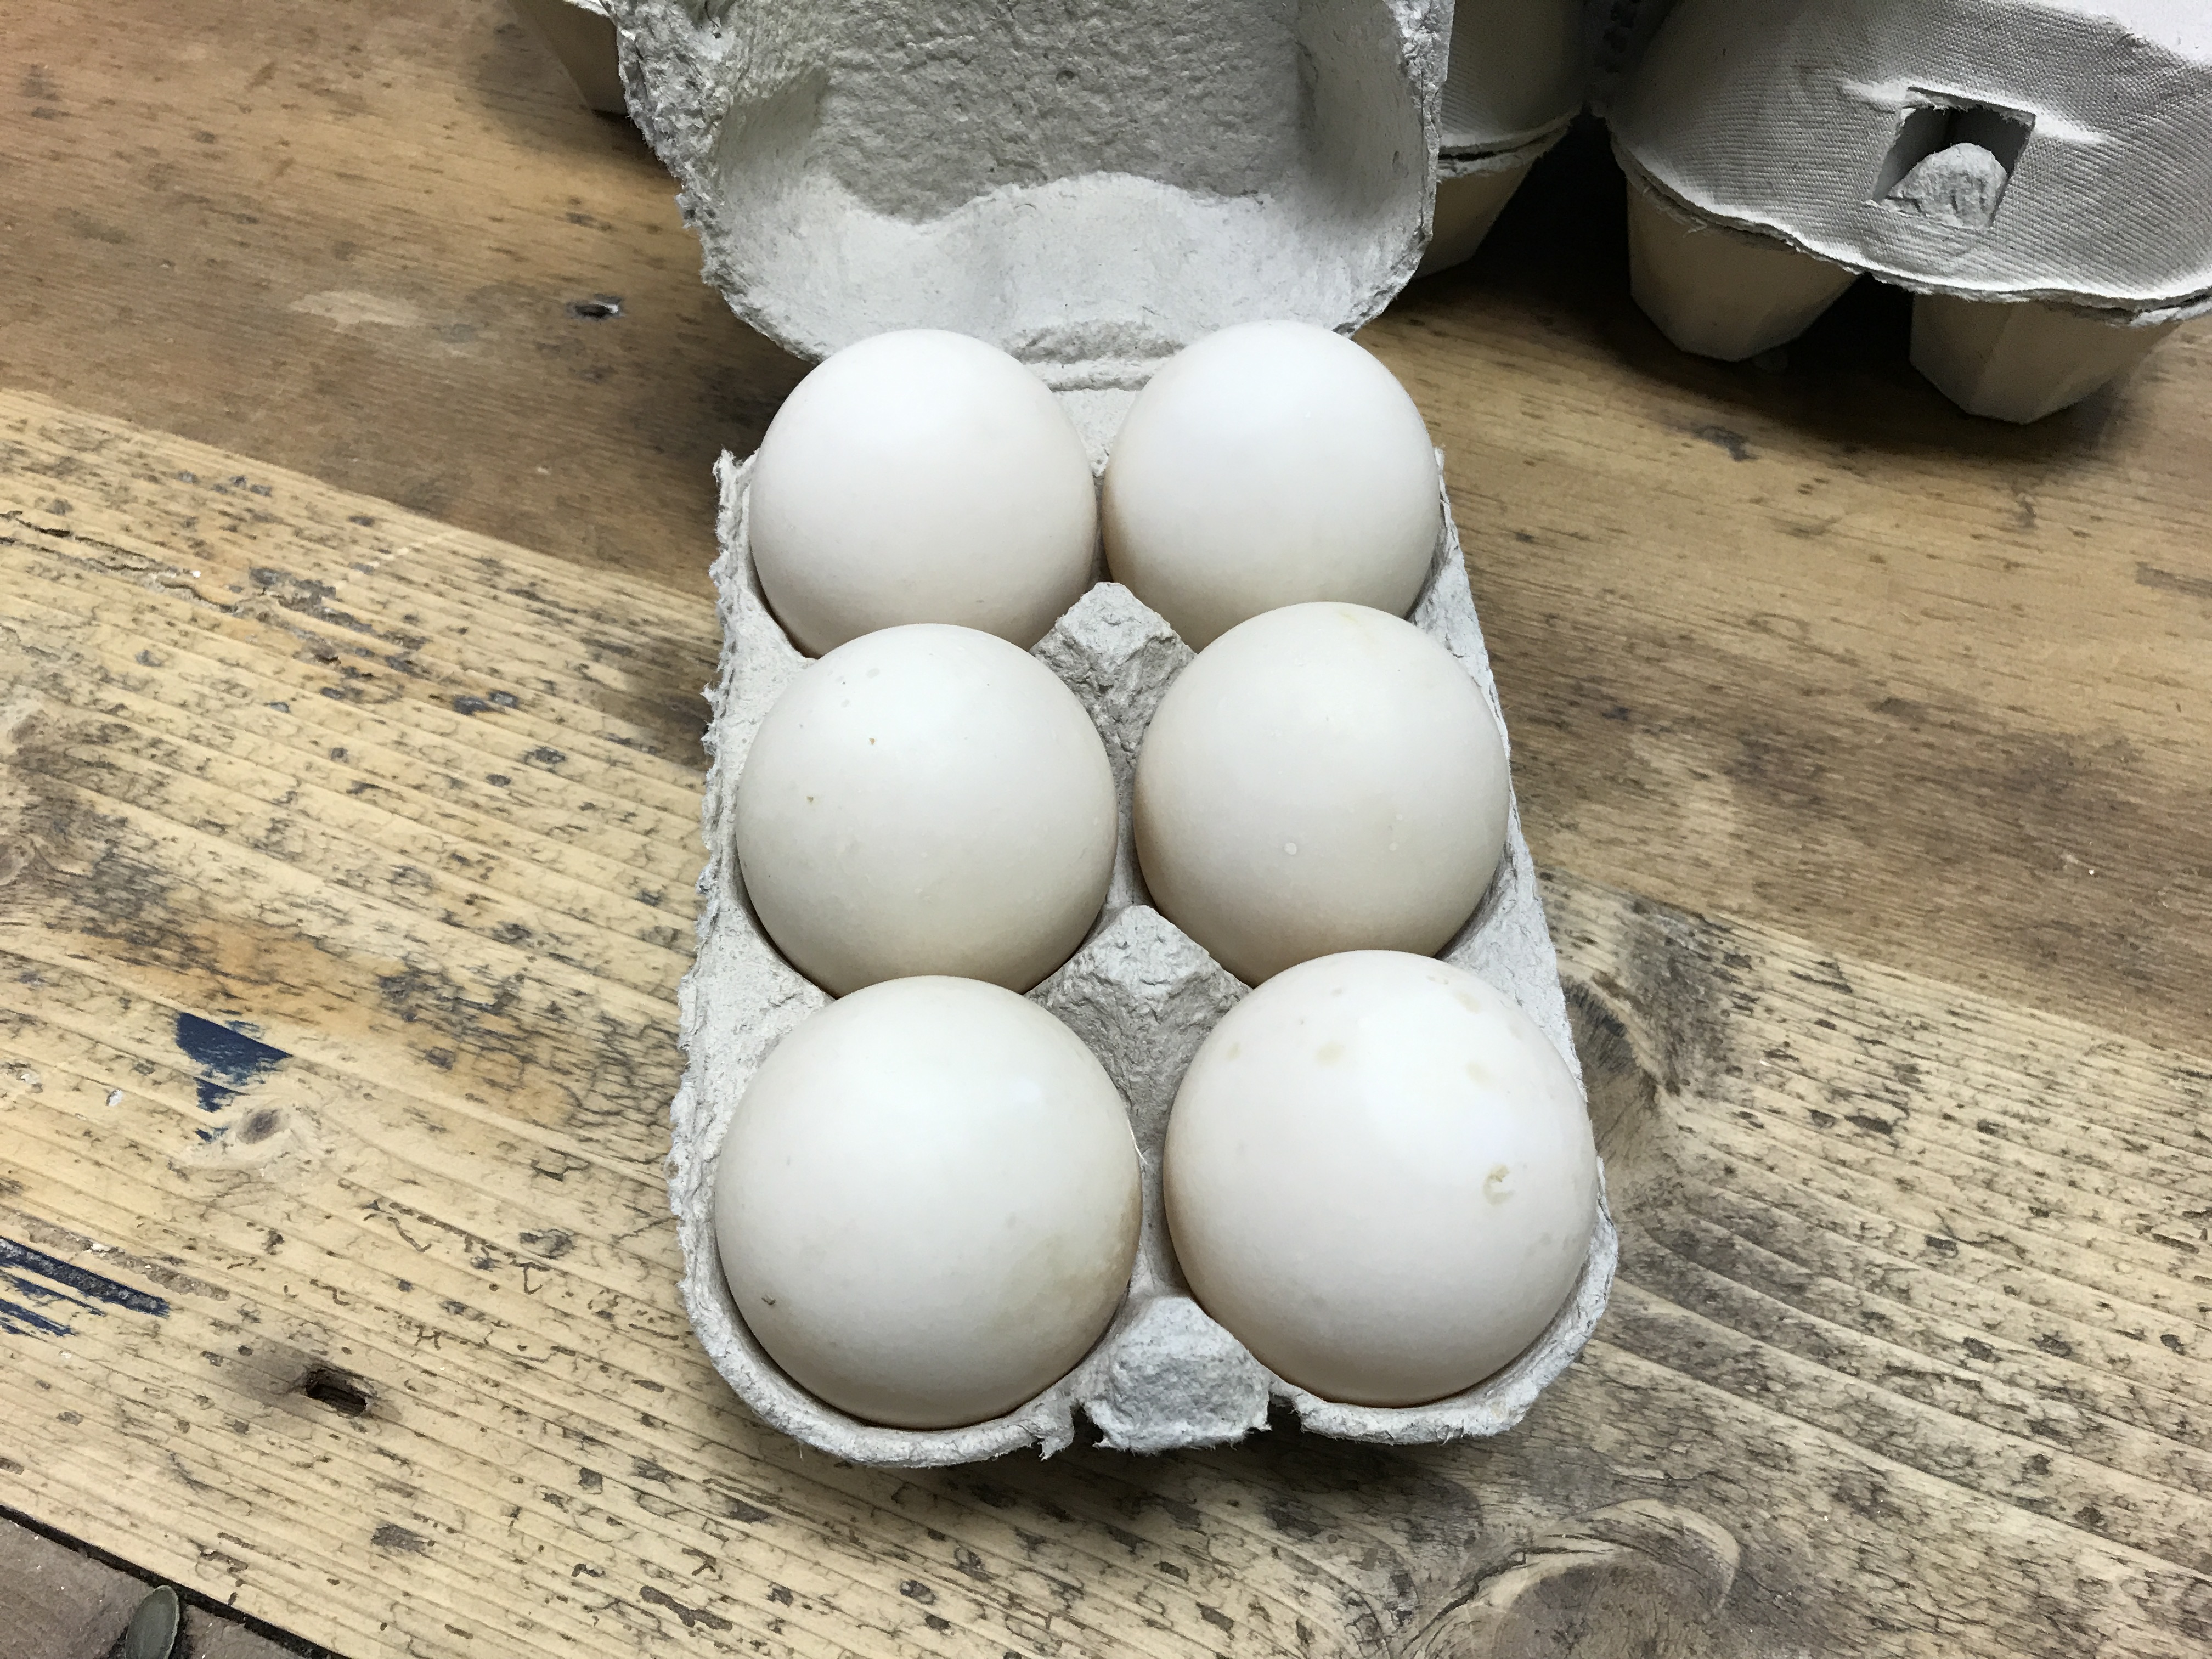 6 Free Range Duck Eggs